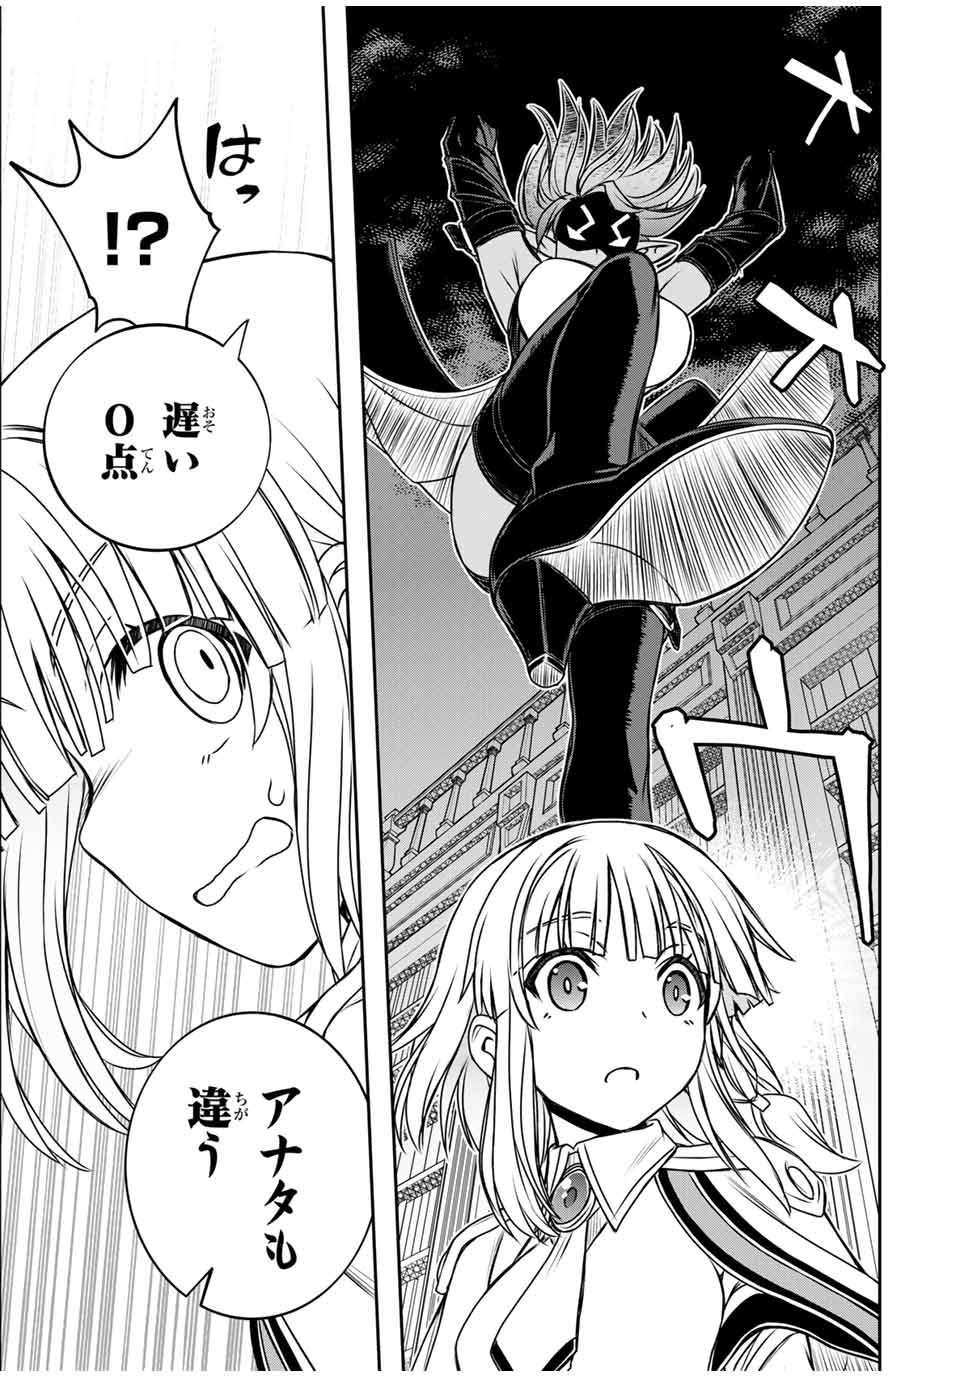 Nengan no Akuyaku Reijou (Last Boss) no Karada wo Teniiretazo!  - Chapter 25 - Page 15